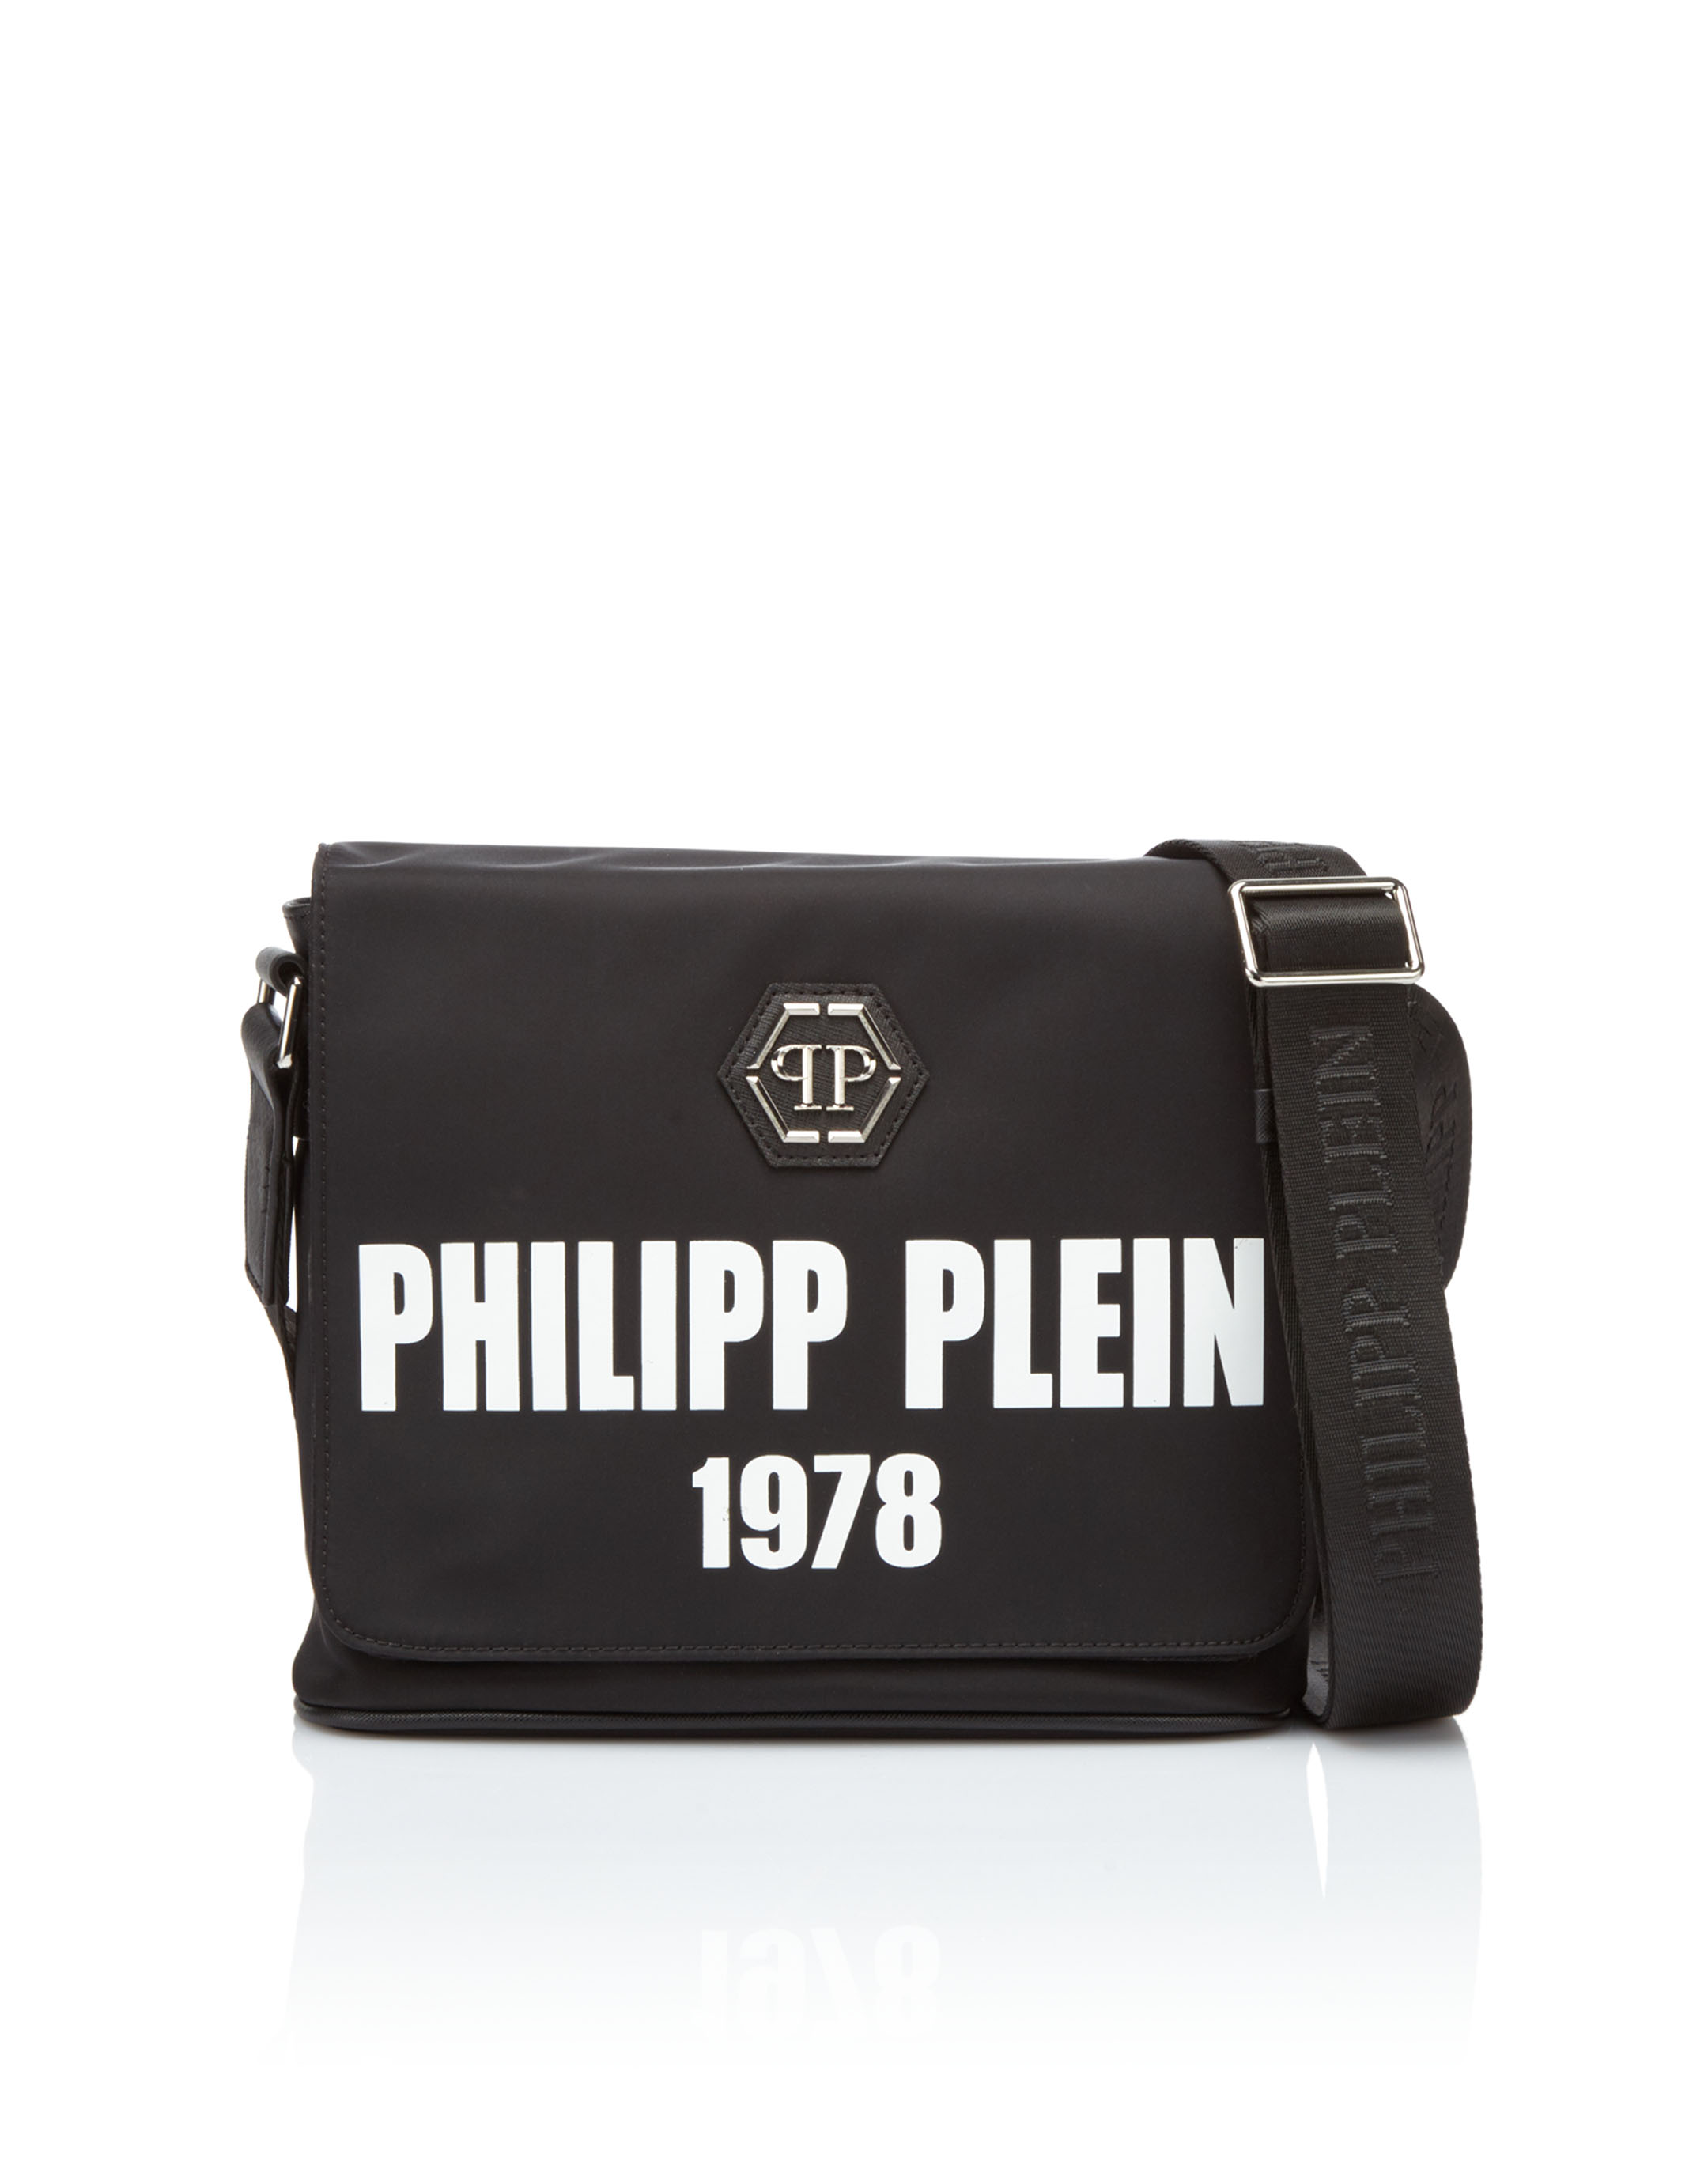 philipp plein shoulder bag